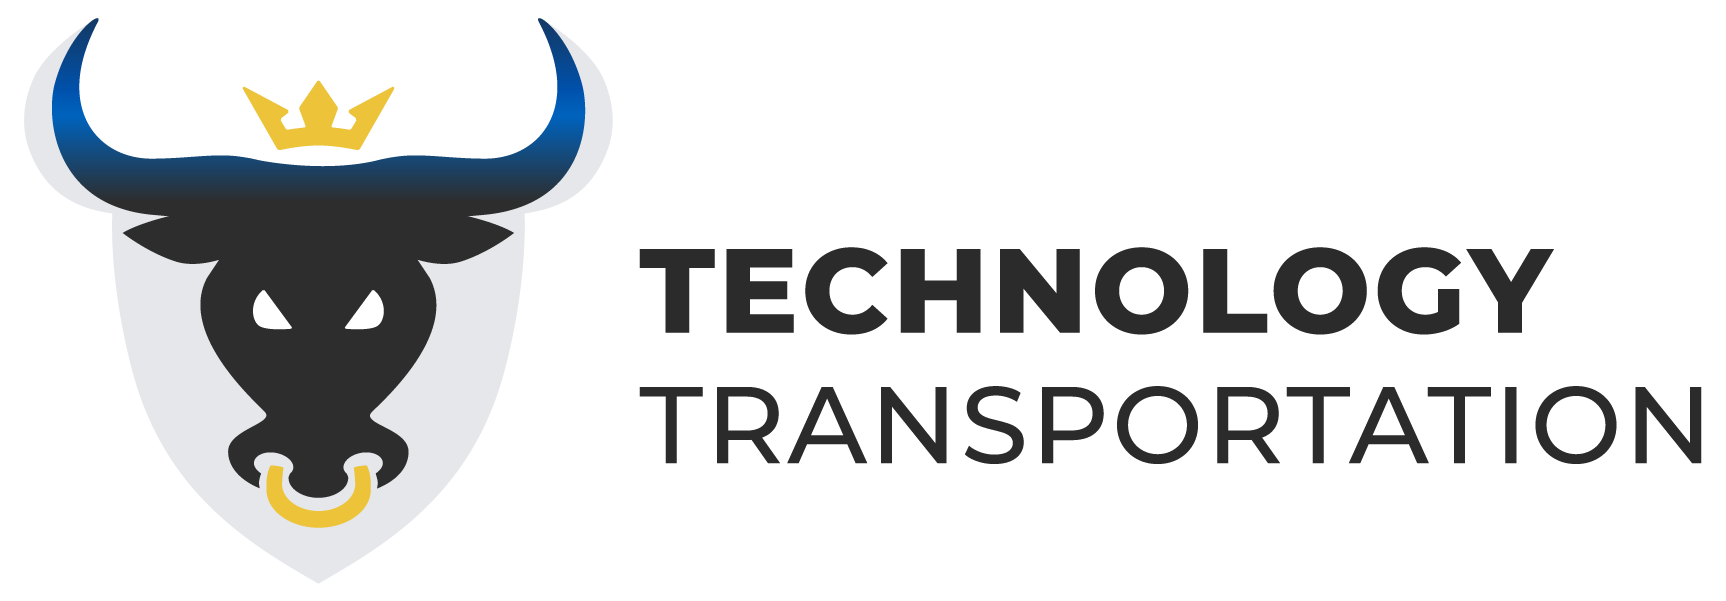 Technology Transportation Mutual RRG